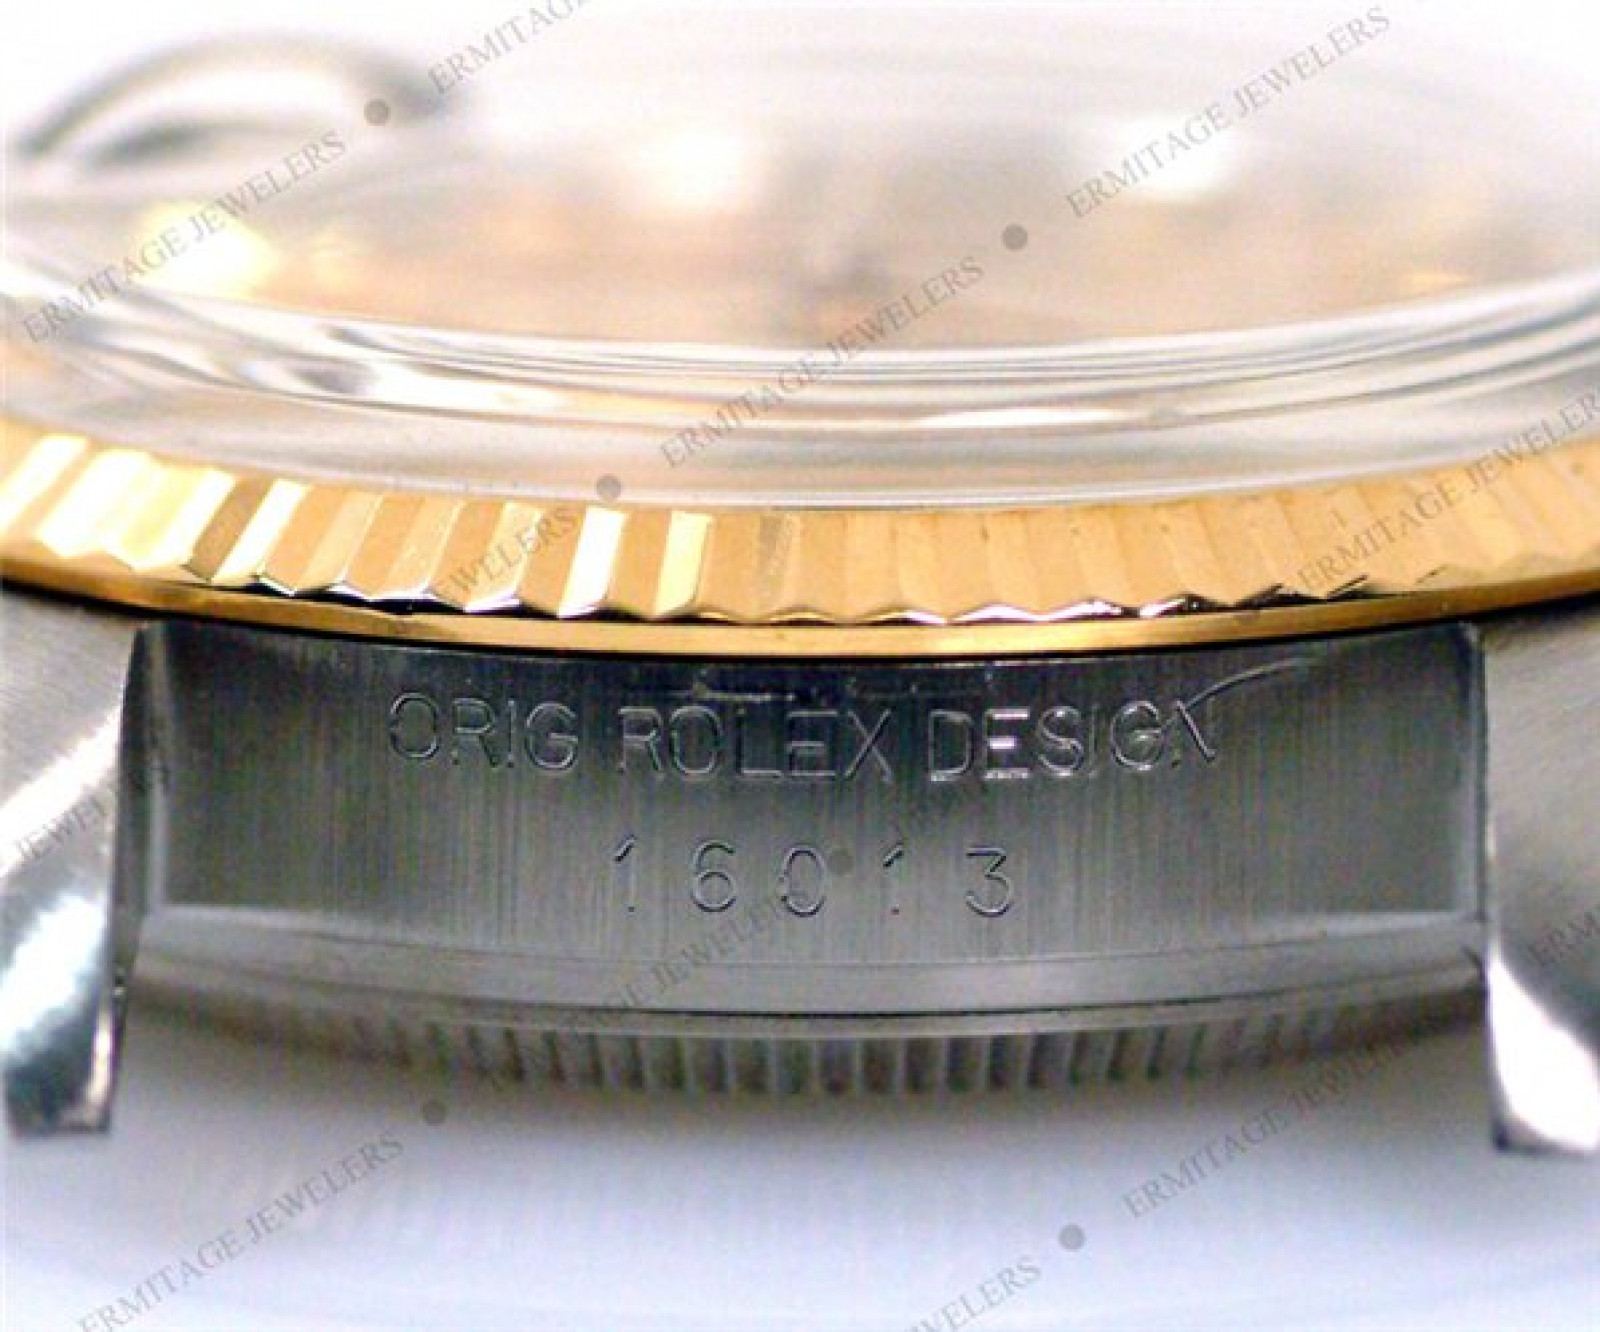 Rolex Datejust 16013 Gold & Steel Champagne